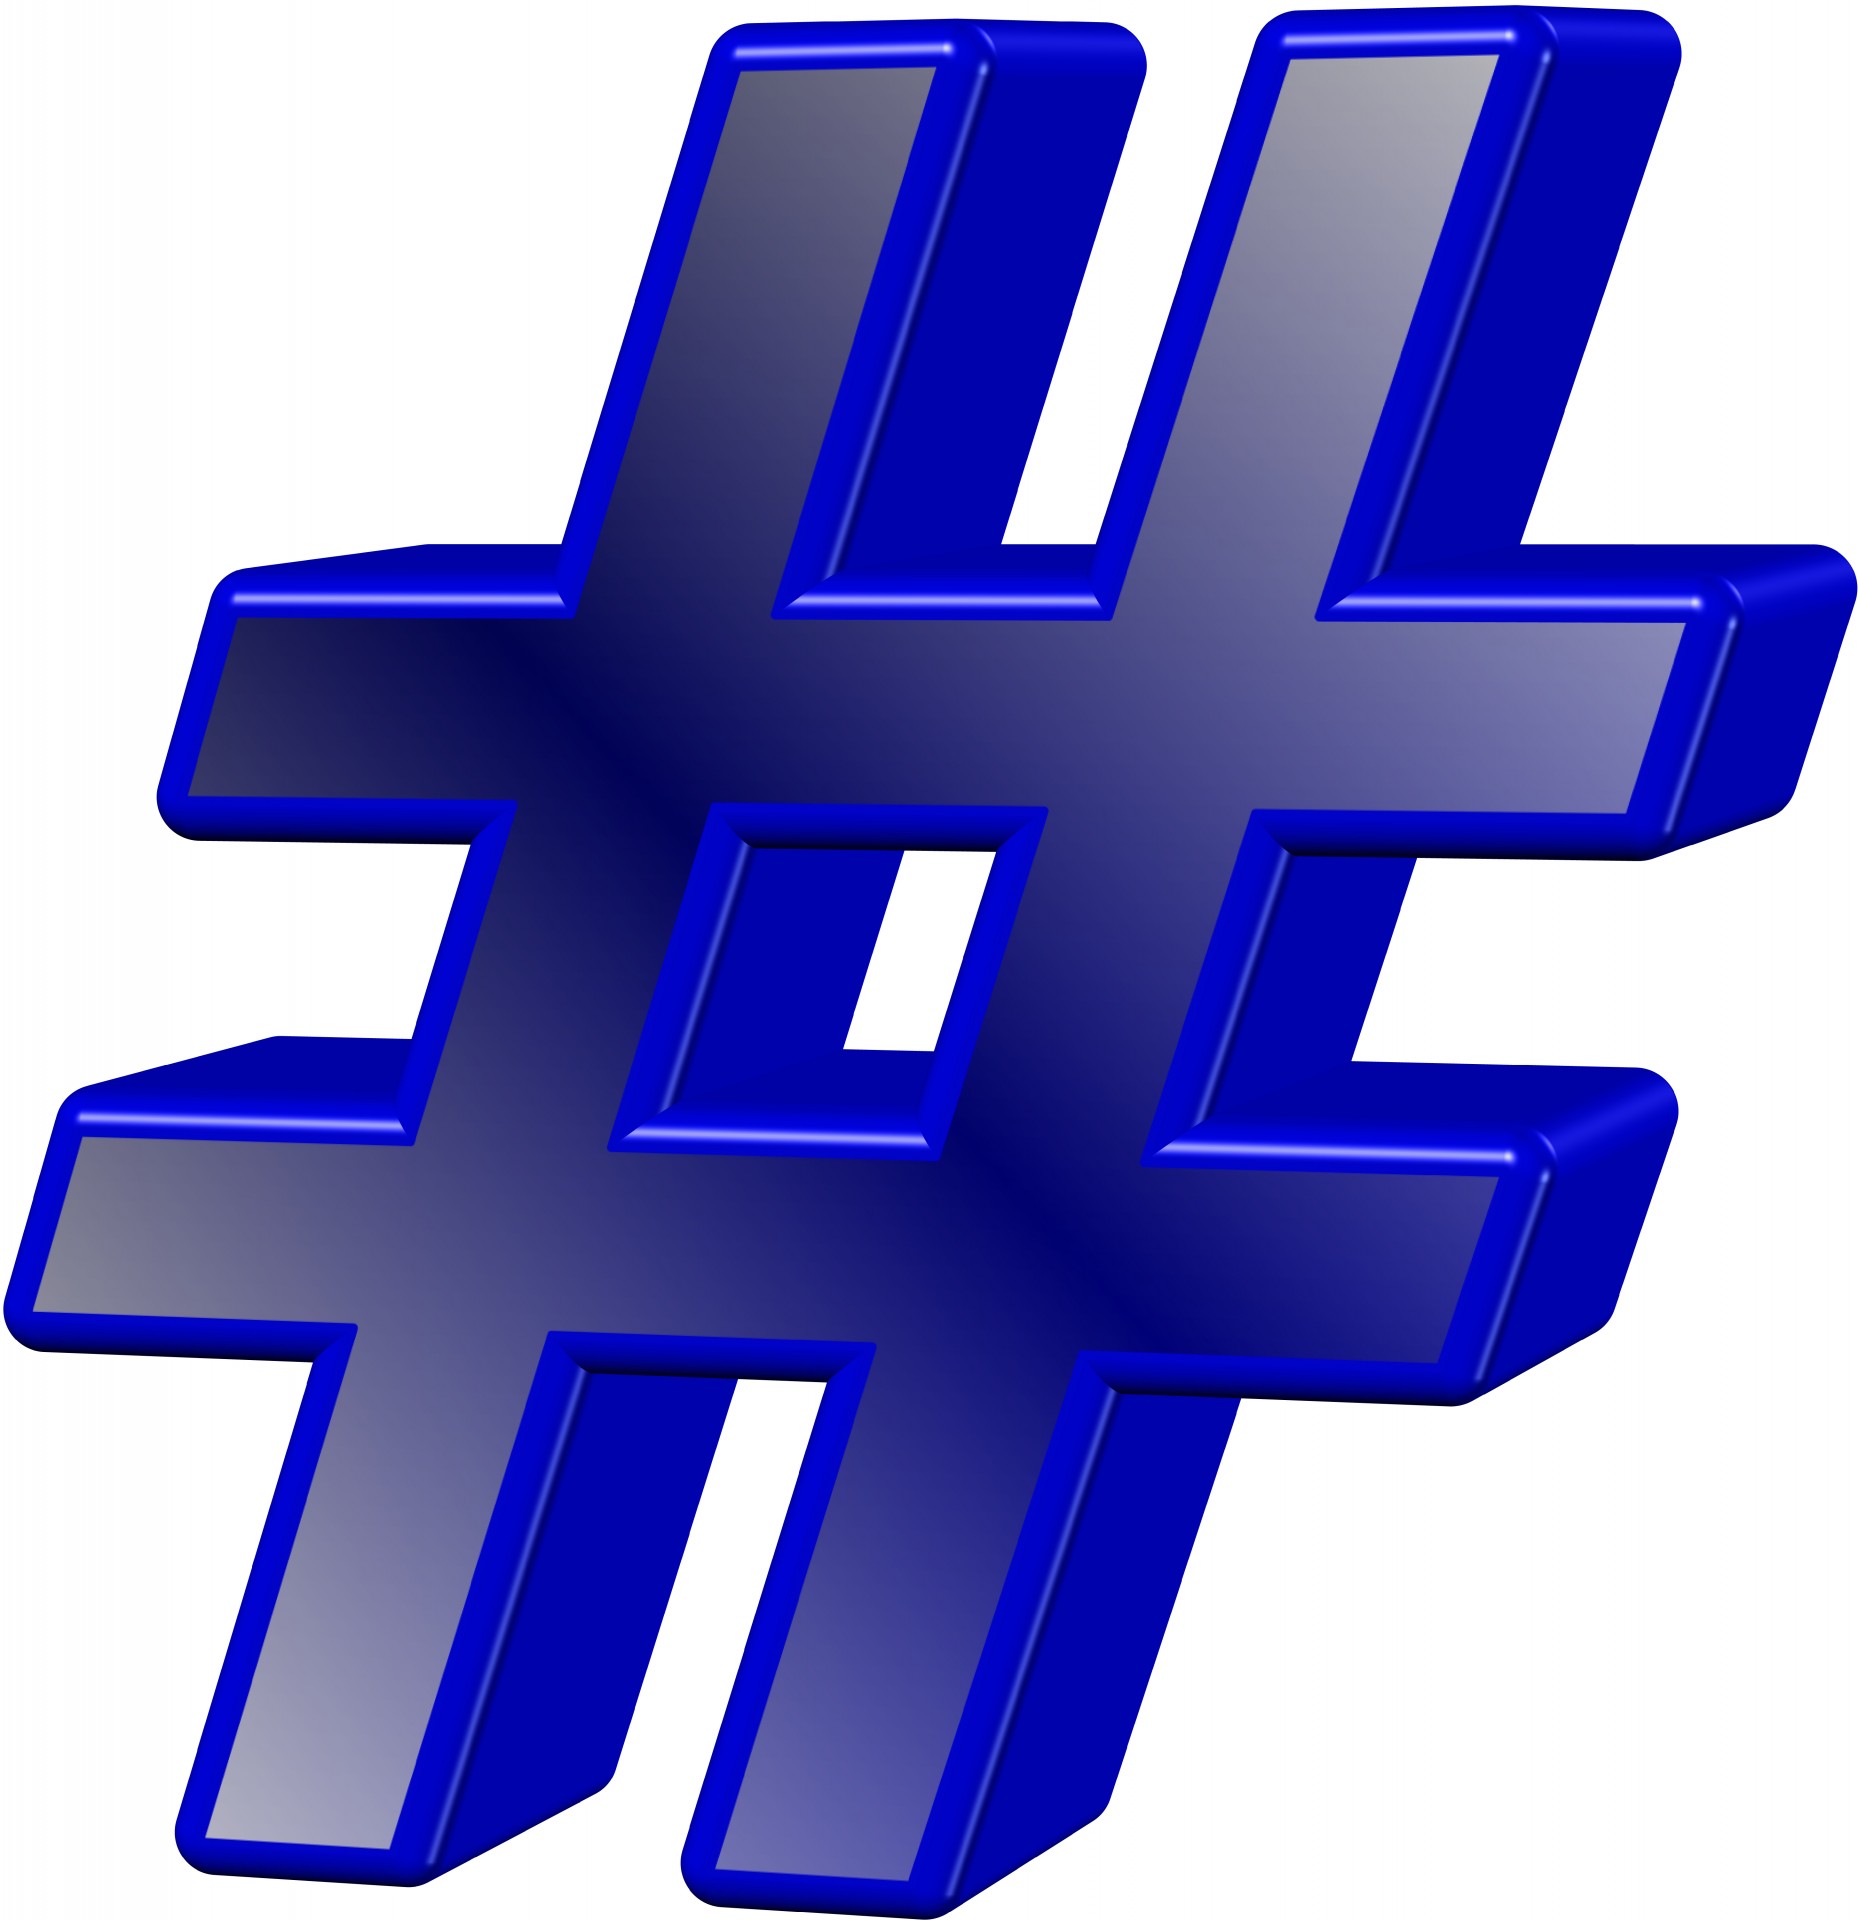 pound symbol hashtag